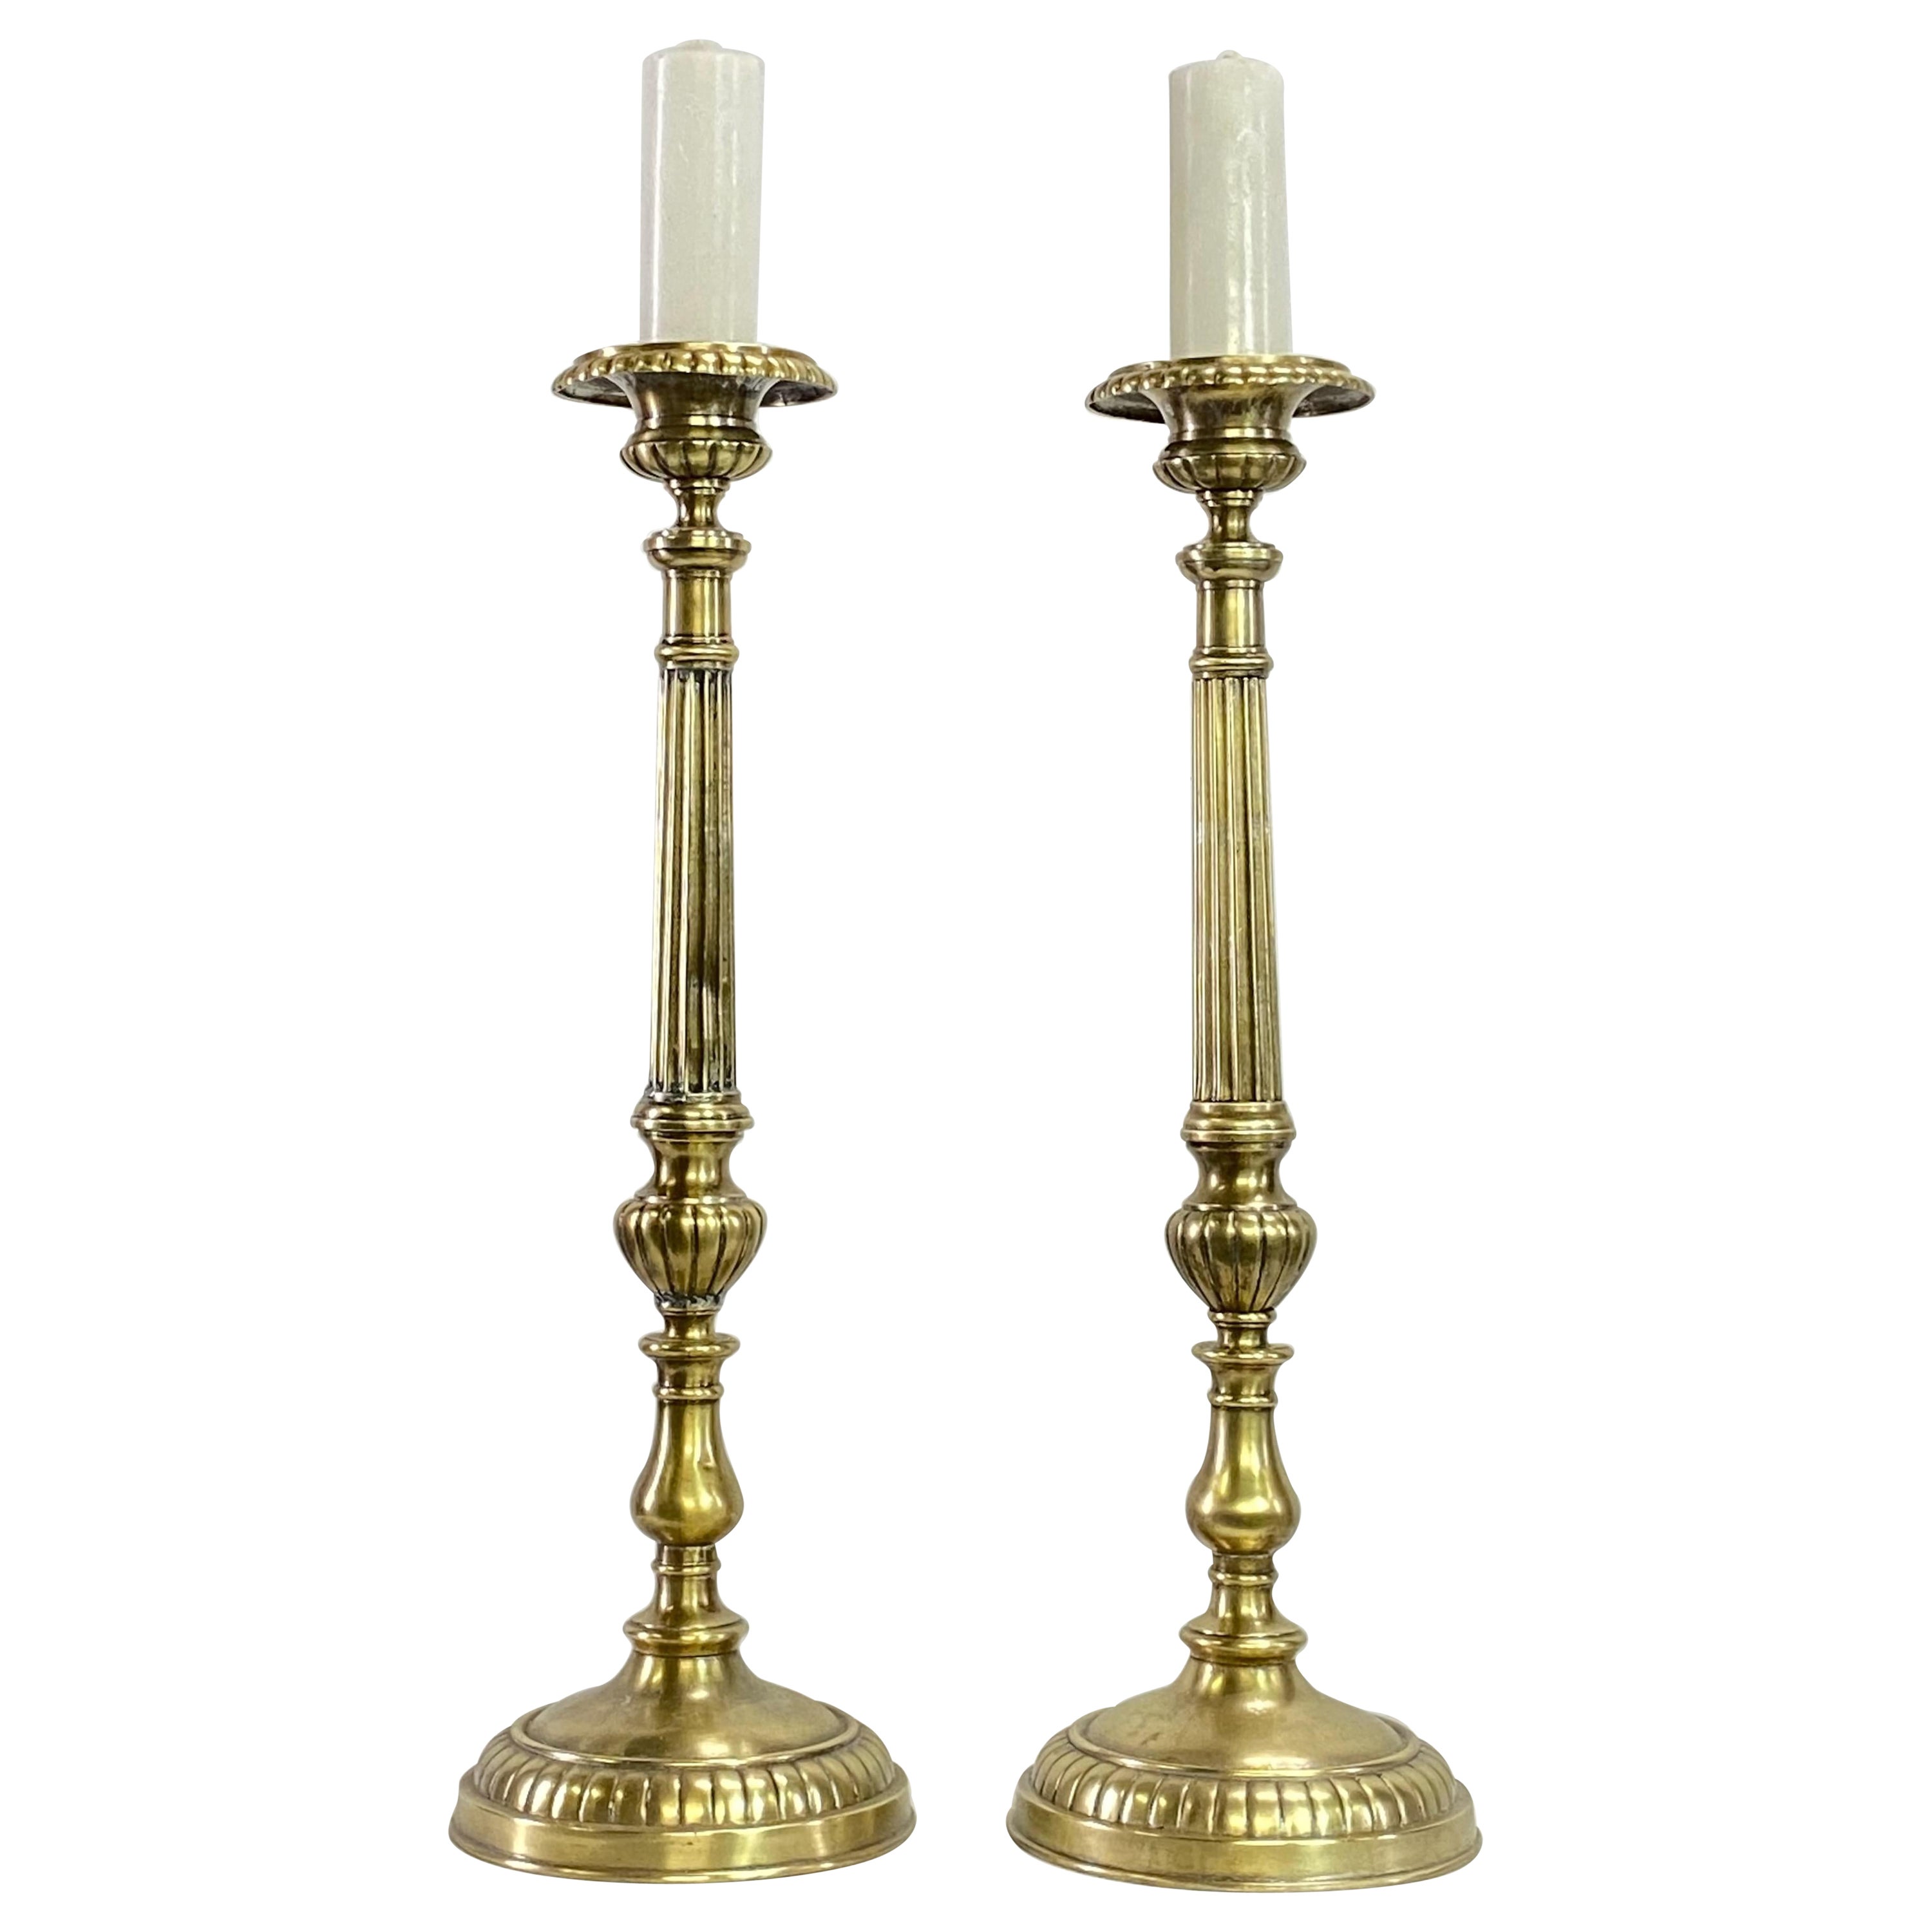 Pair of Early 19th Century European Brass Candlesticks, circa 1840